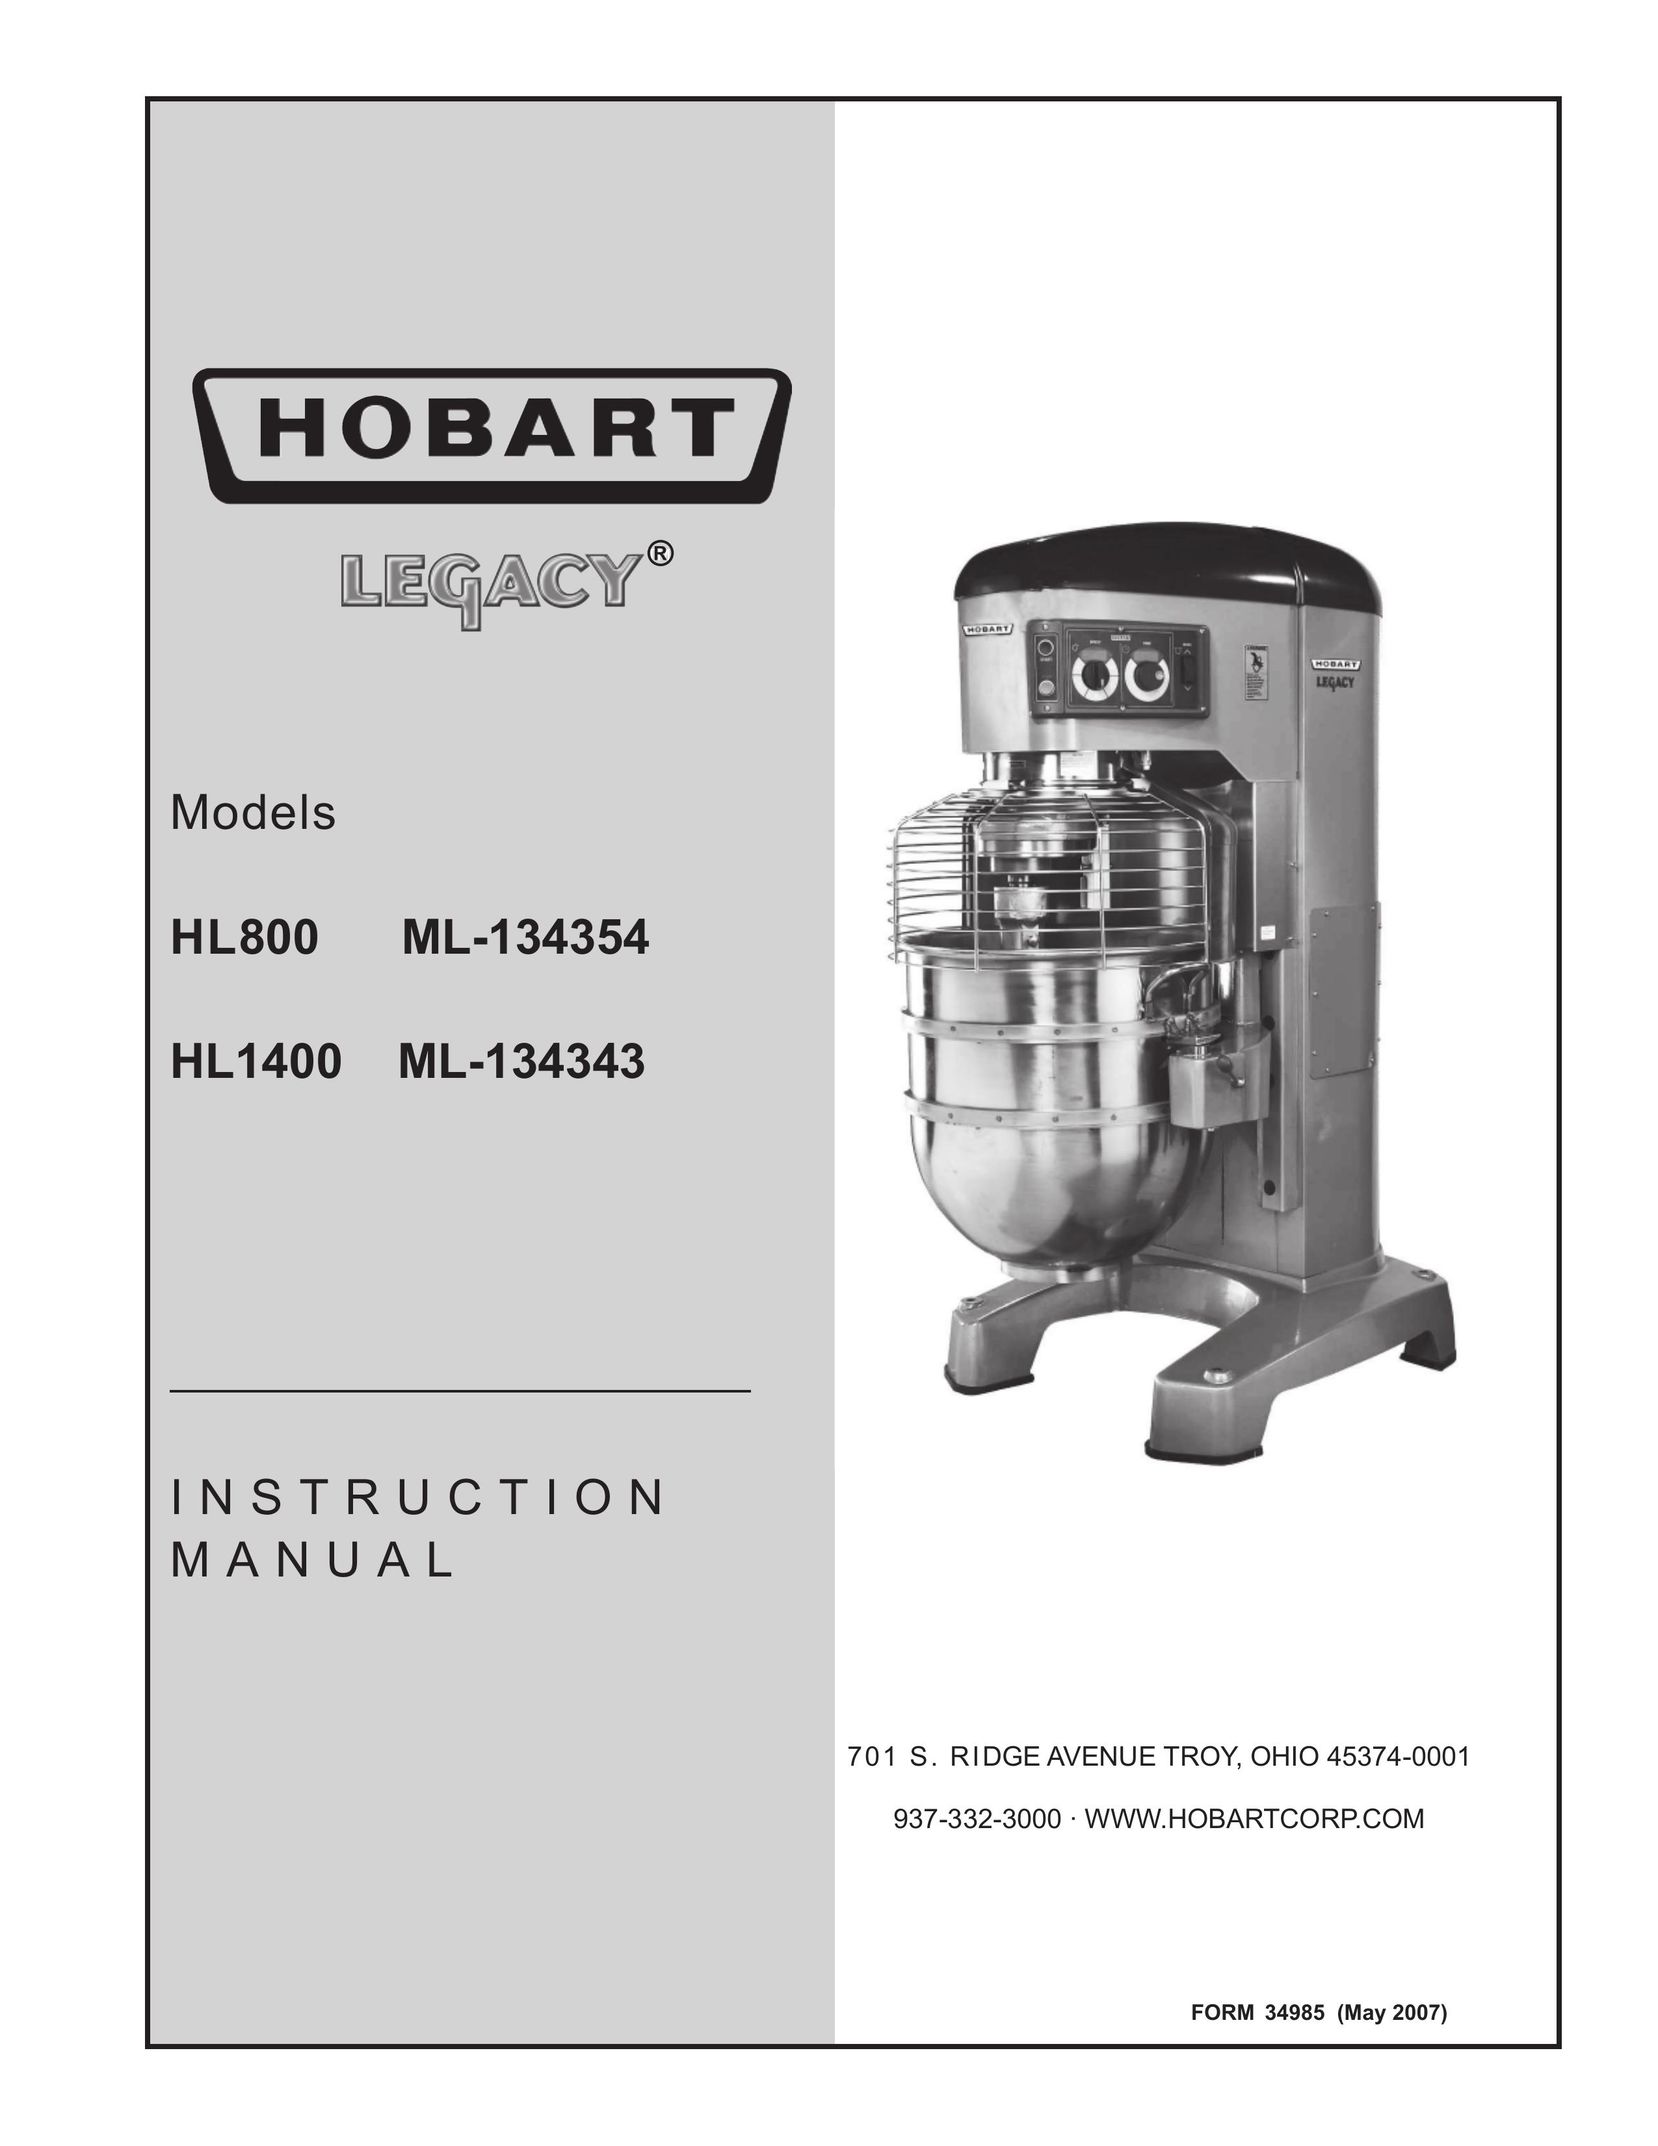 Hobart ML-134354 Mixer User Manual